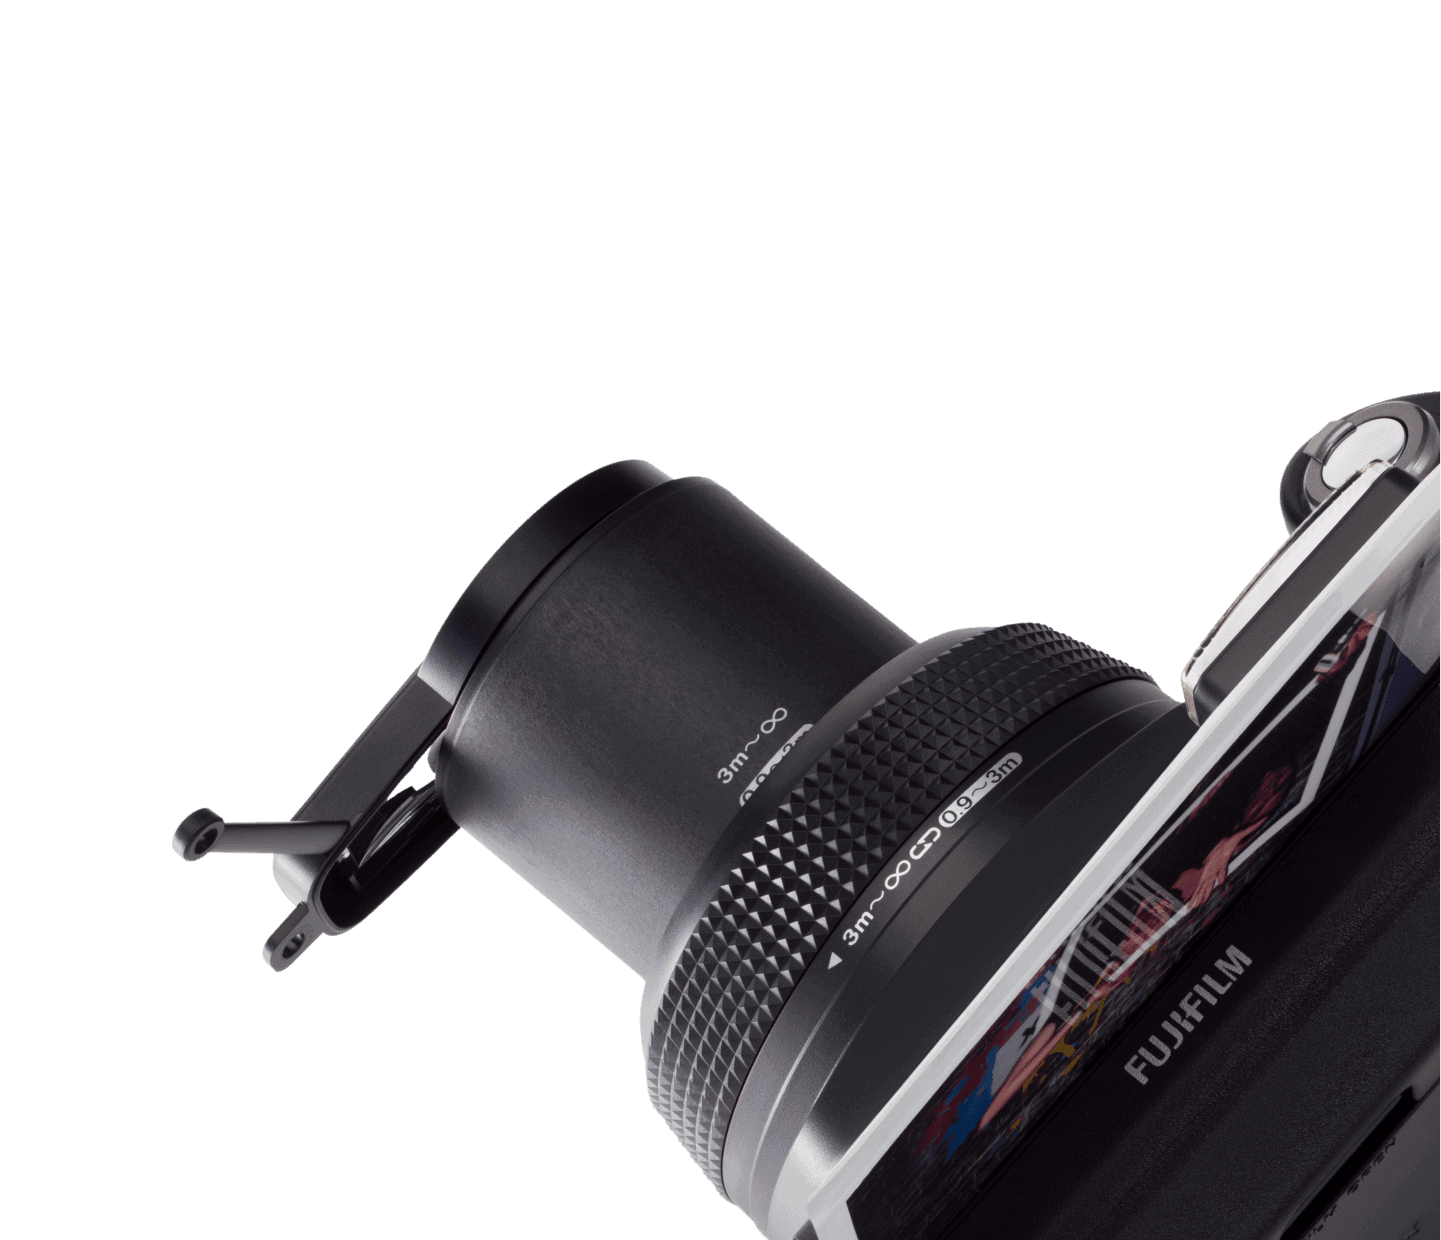 Fujifilm Instax Wide 300 Instant Film Camera — Glazer's Camera